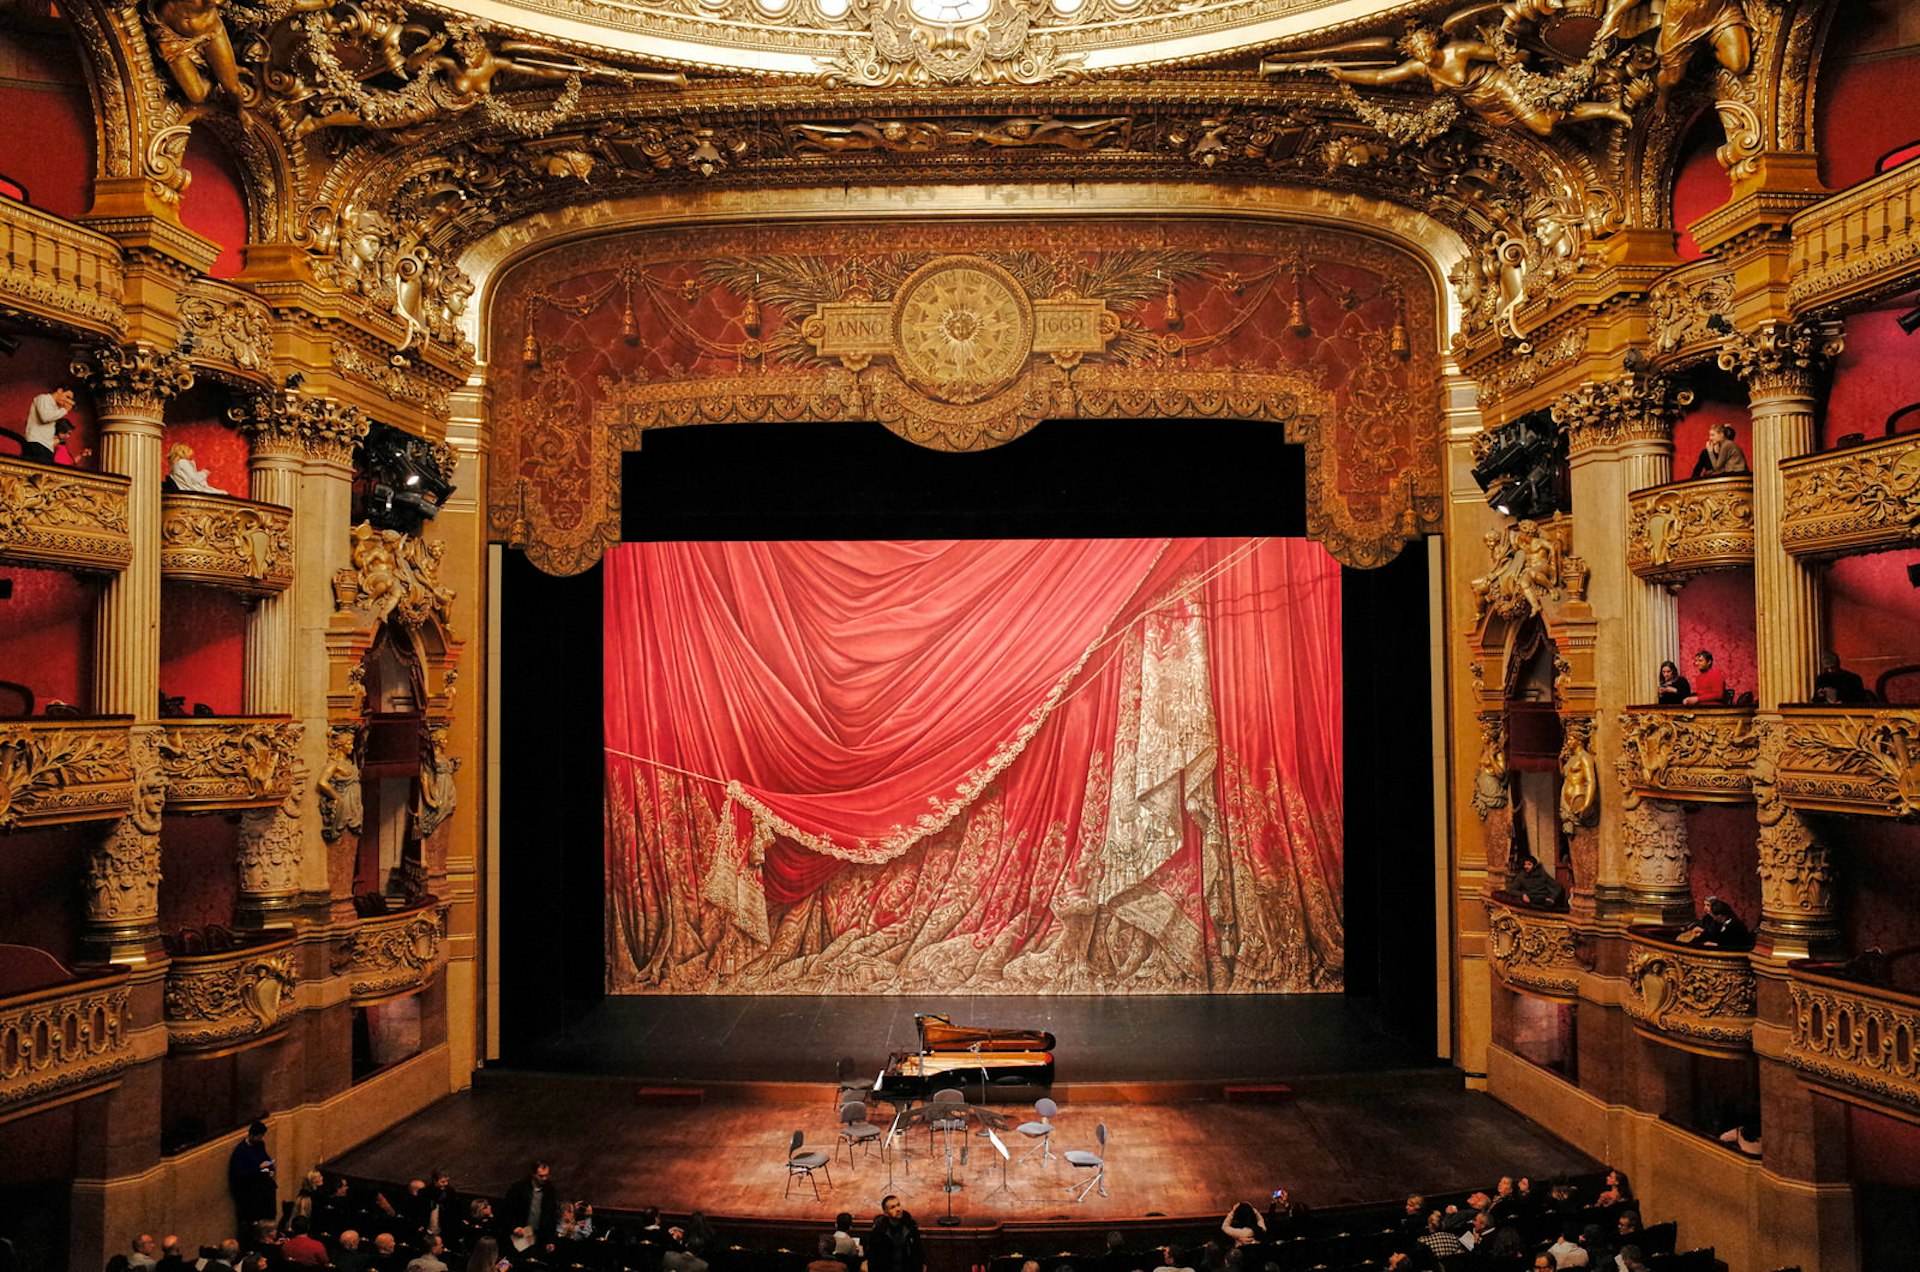 The golden-gilded interior of the Palais Garnier opera house in Paris, France